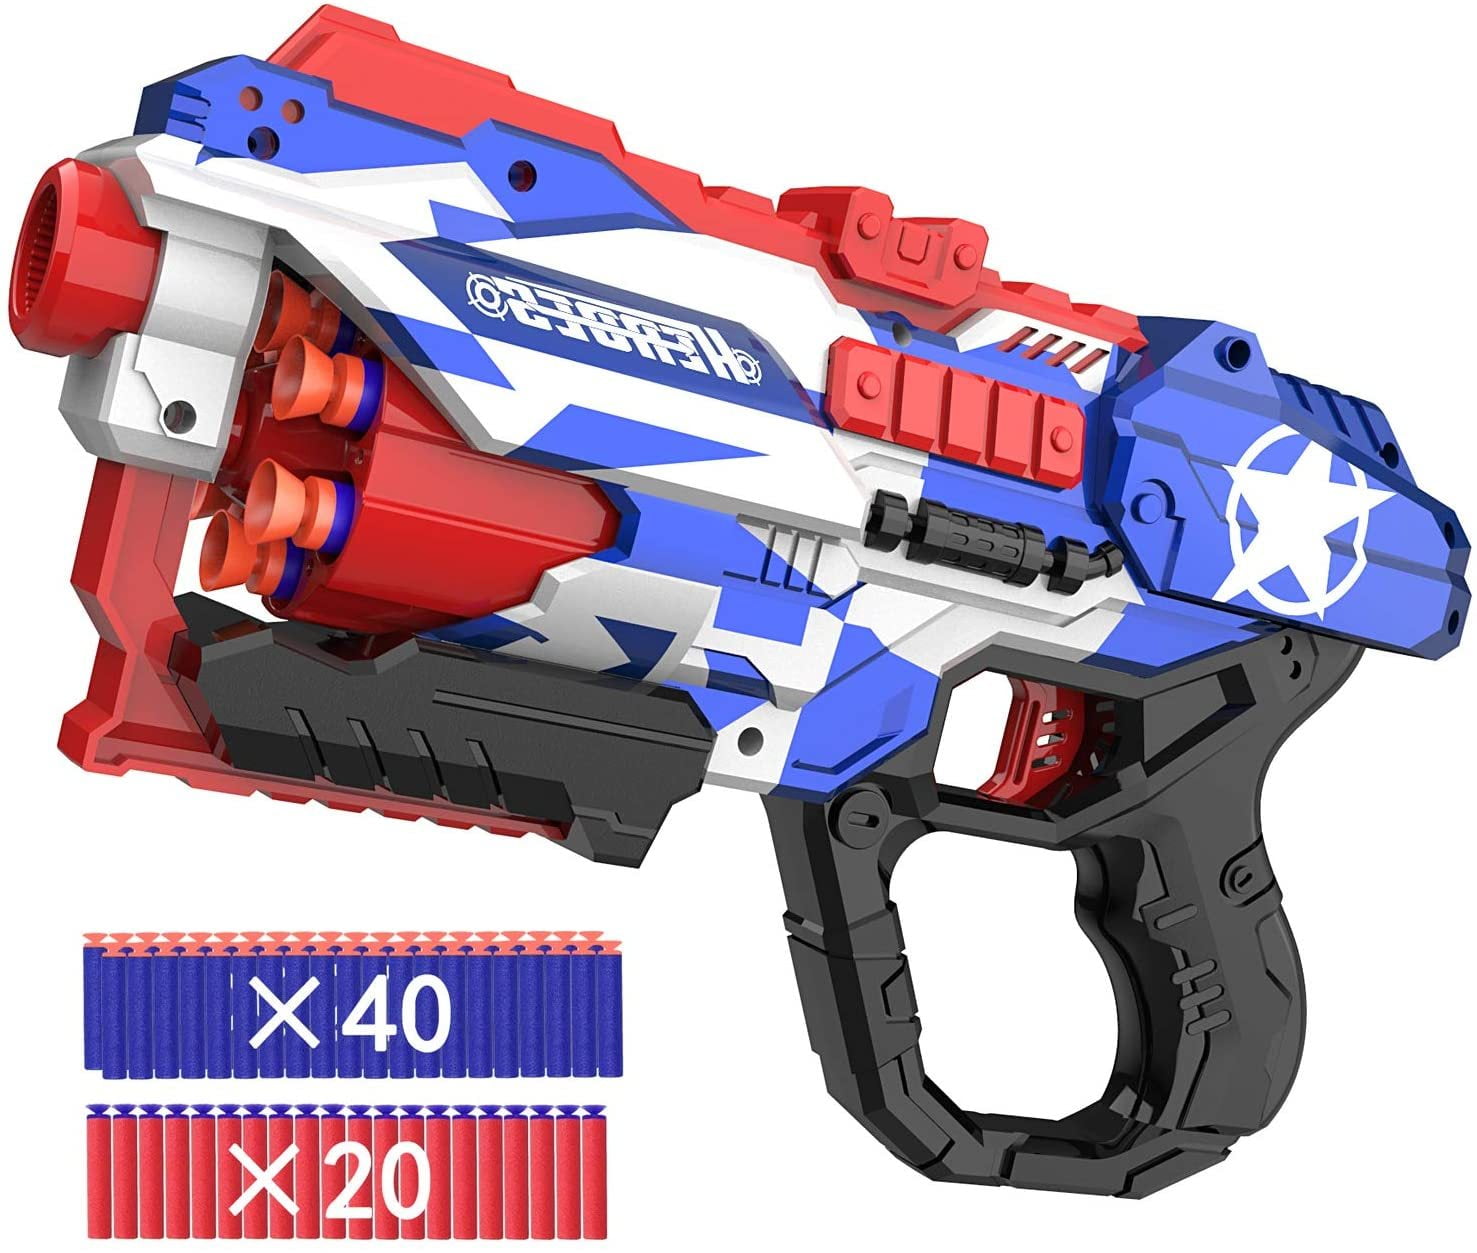 Nerf Super Size Blaster Toy Gun Soft Foam Bullet Darts For Kids Boys Xmas Gift 